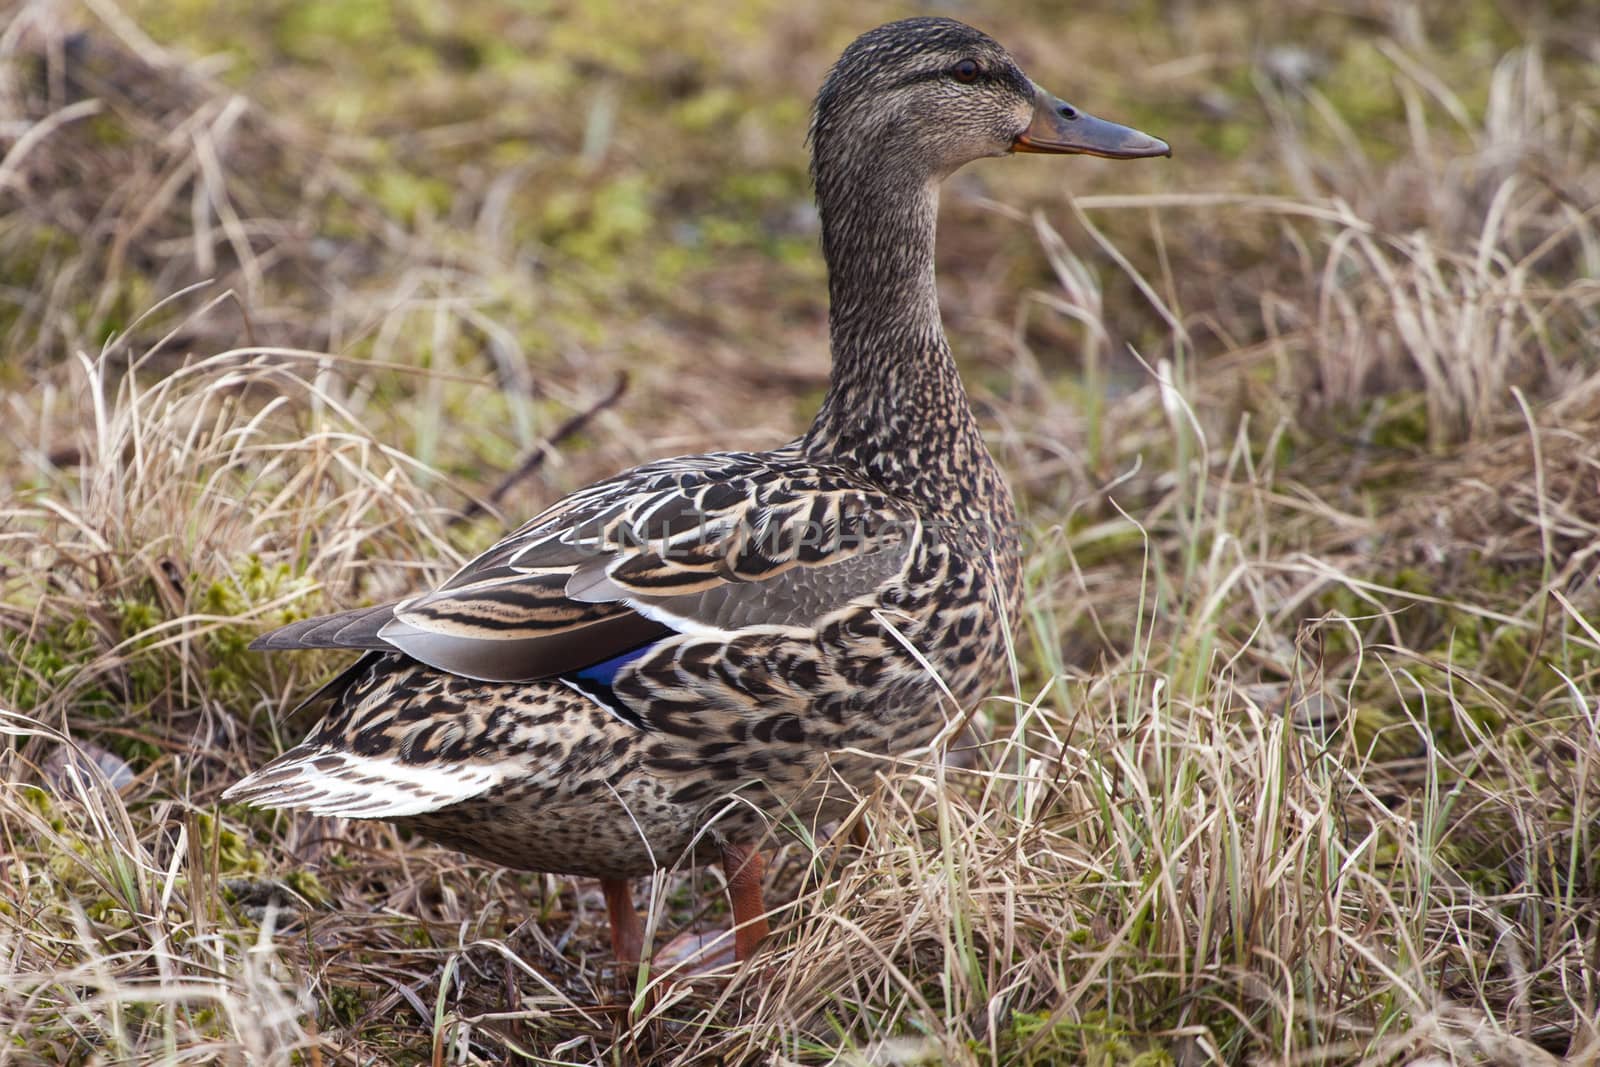 A female mallard looks alert while standing in wetland